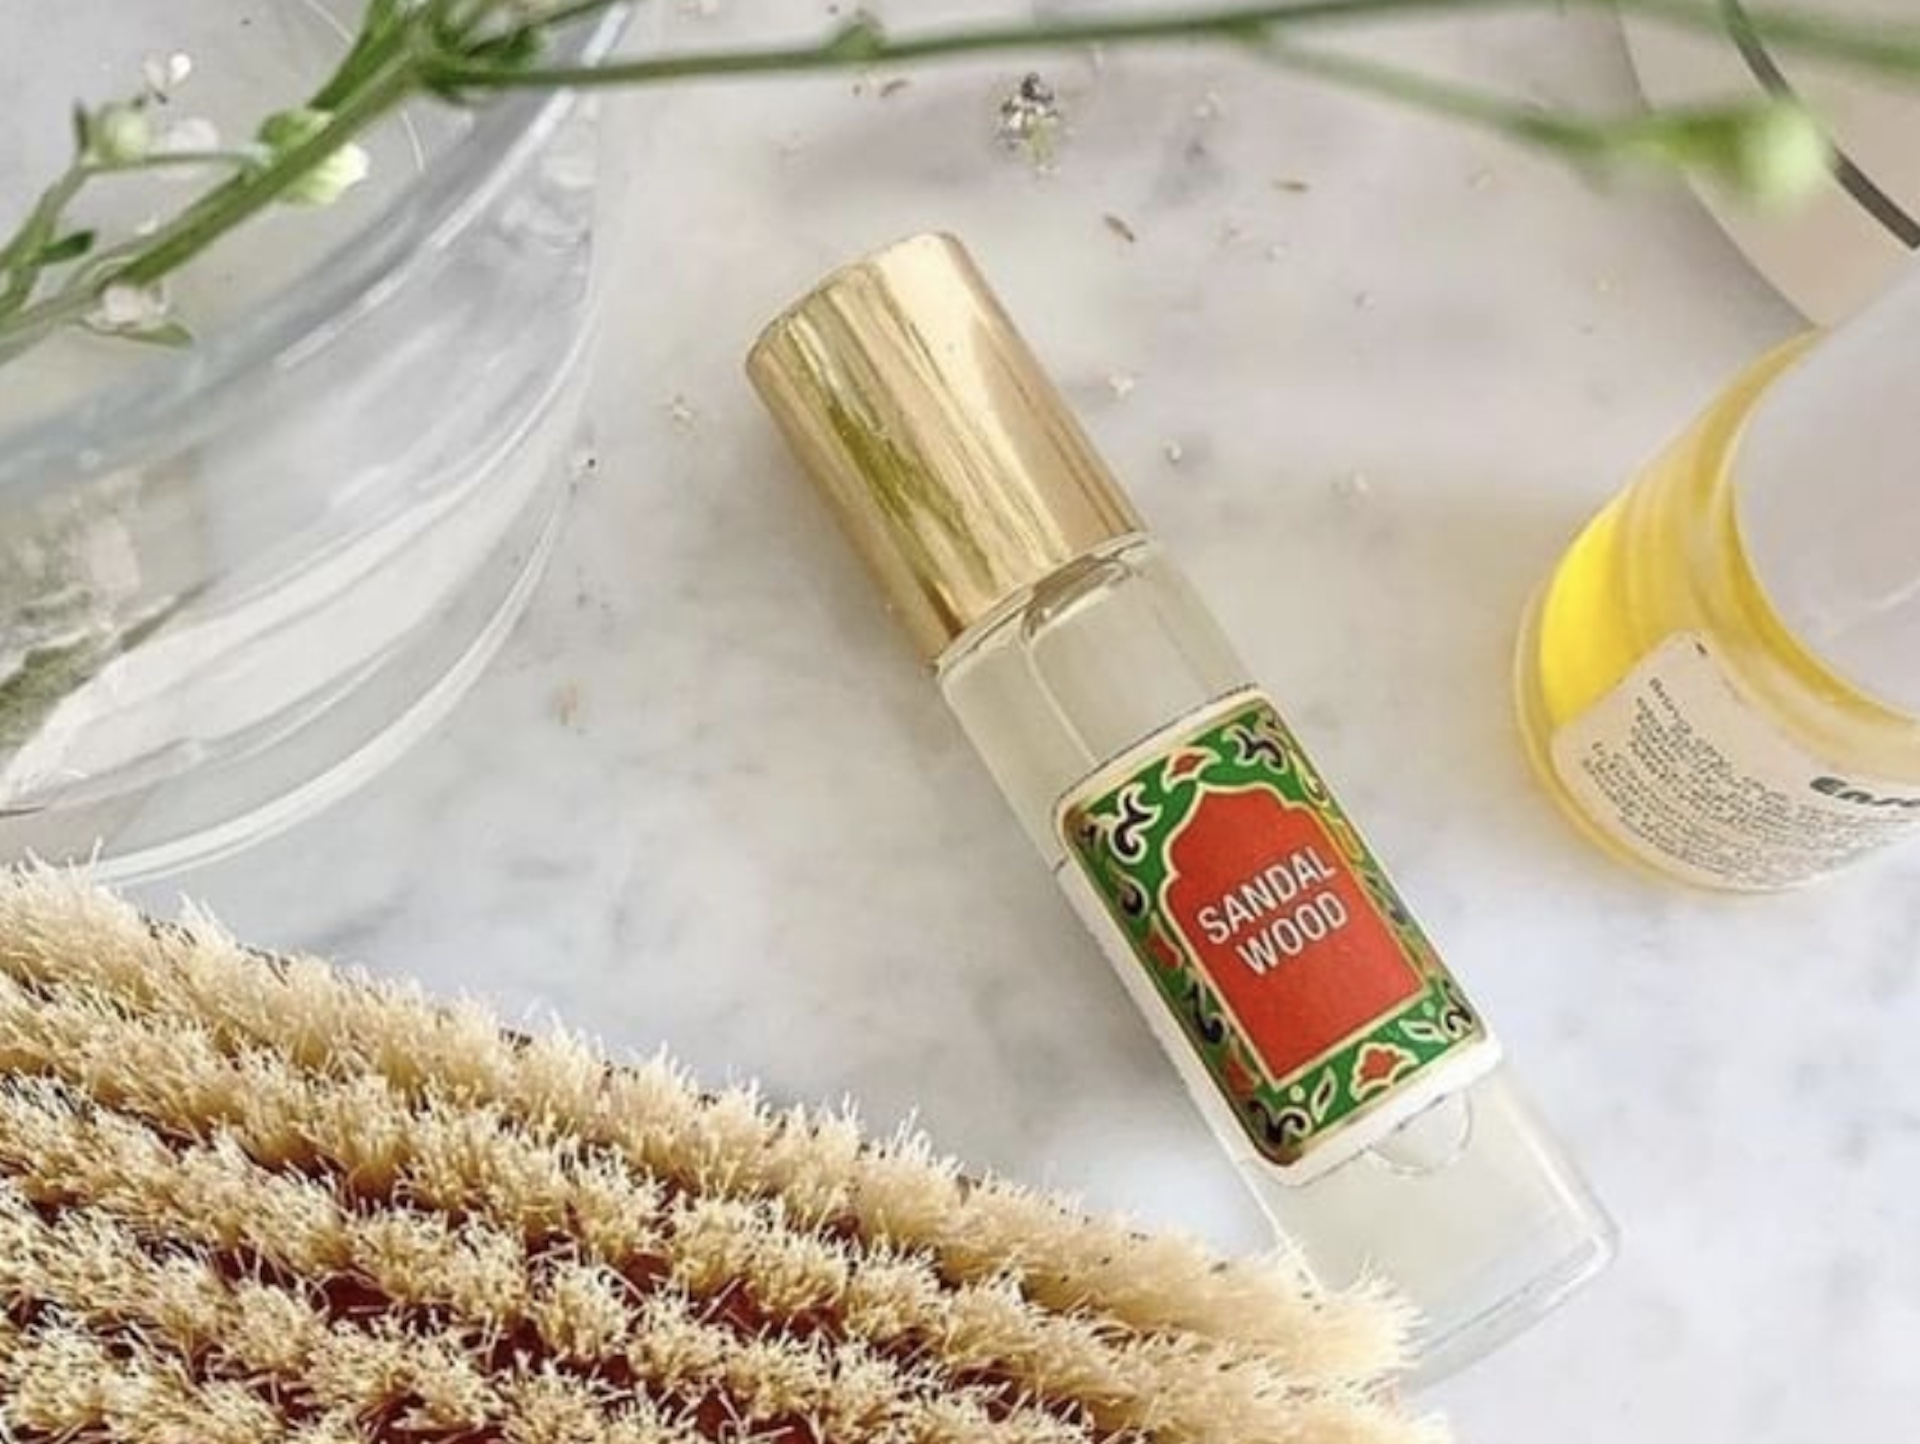 Create Your Own Unique Scent Nemat Amber Fragrance Oil